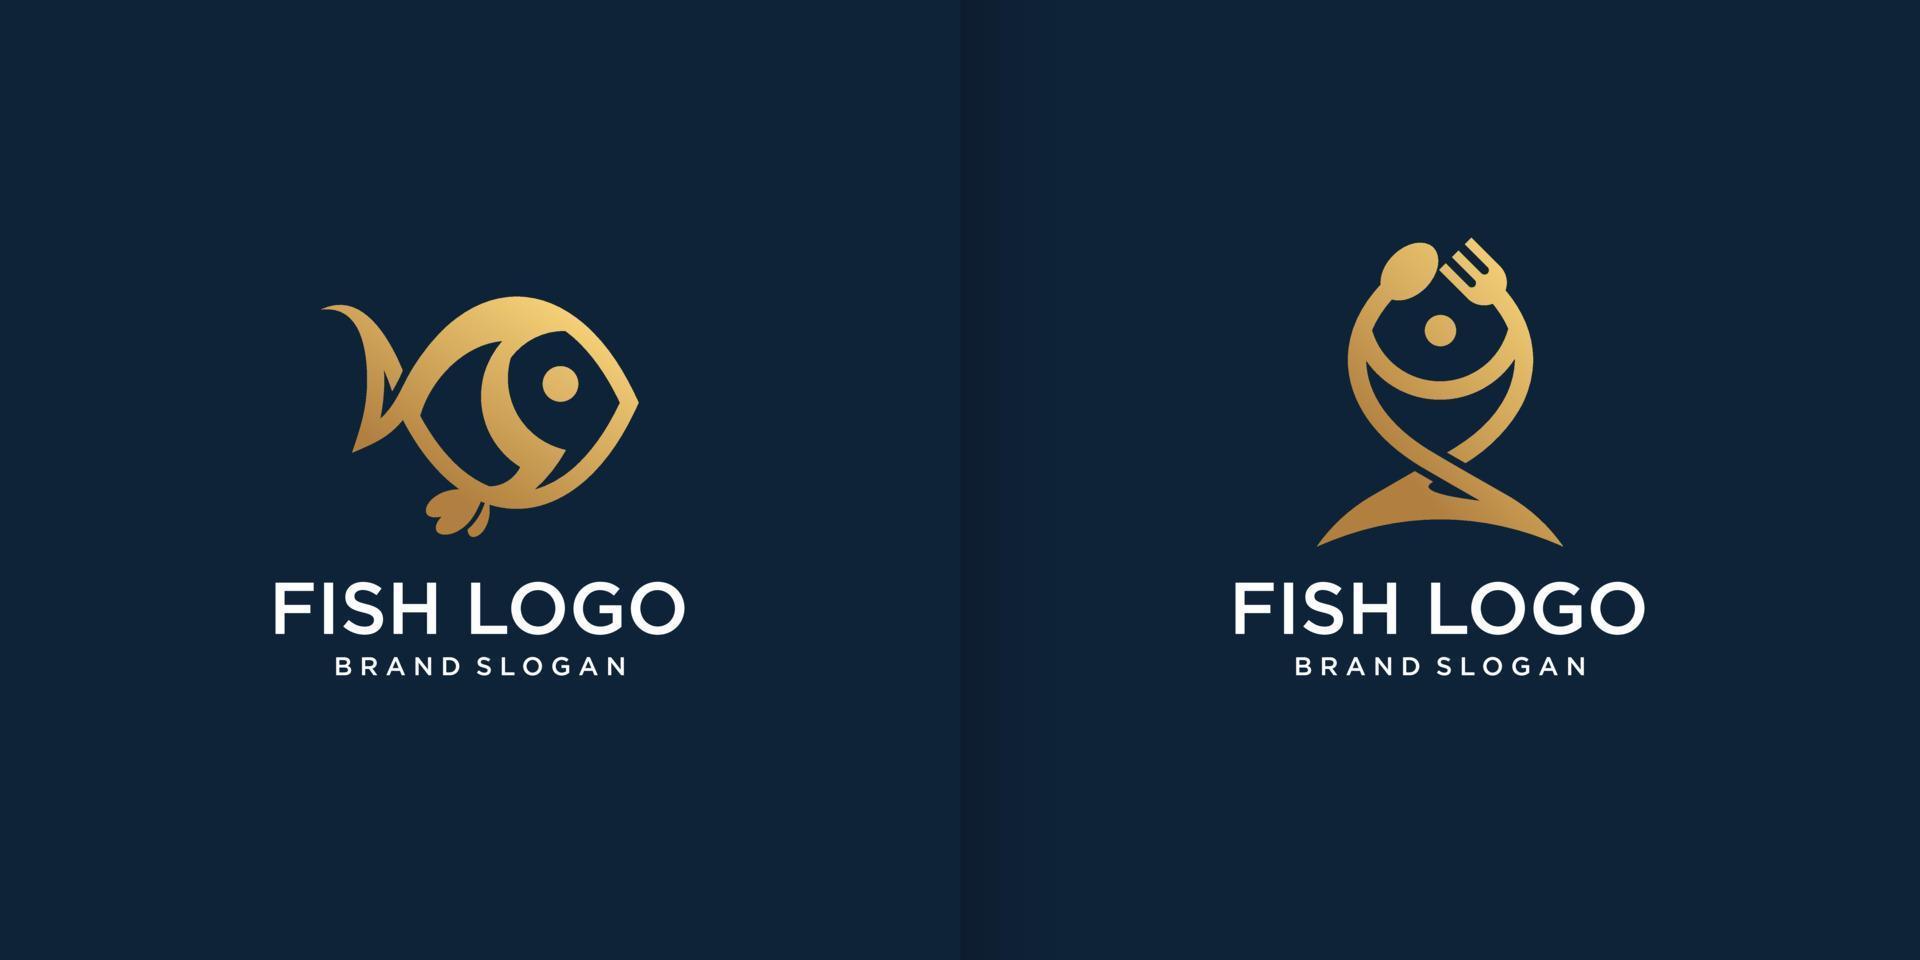 plantilla de logotipo de pez dorado con vector premium de estilo creativo moderno